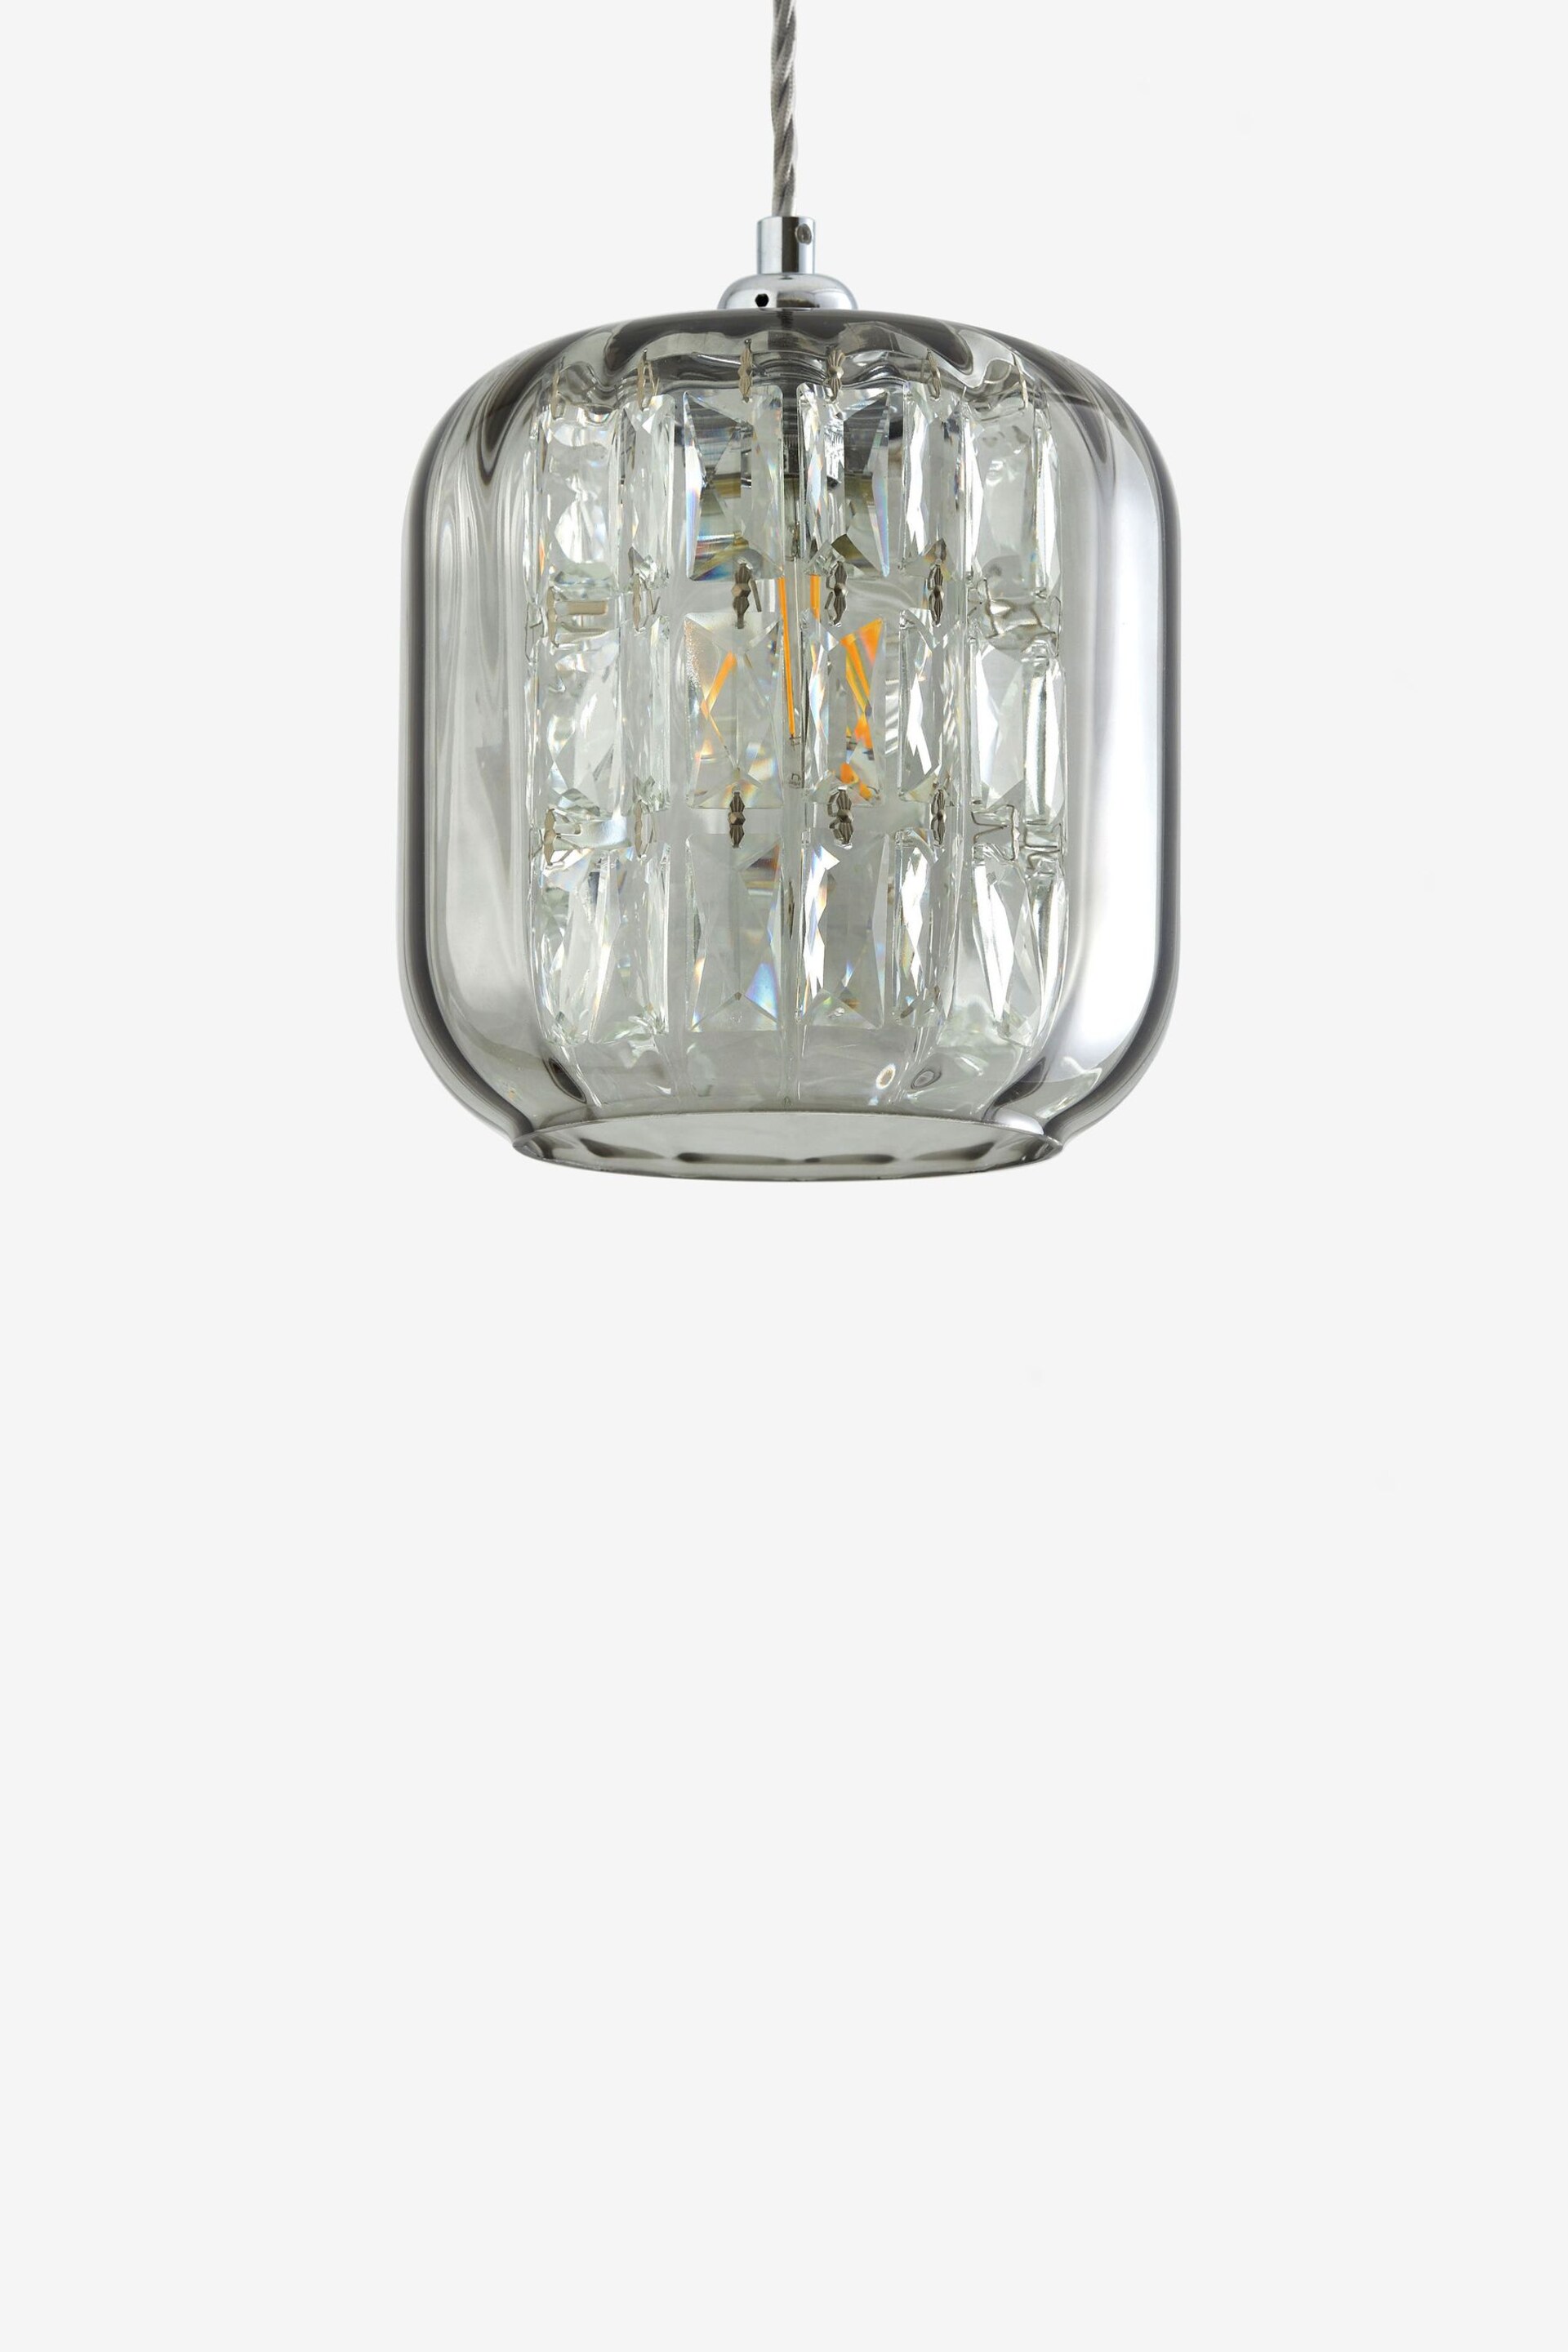 Smoke Grey Chelsea Easy Fit Pendant Lamp Shade - Image 6 of 7